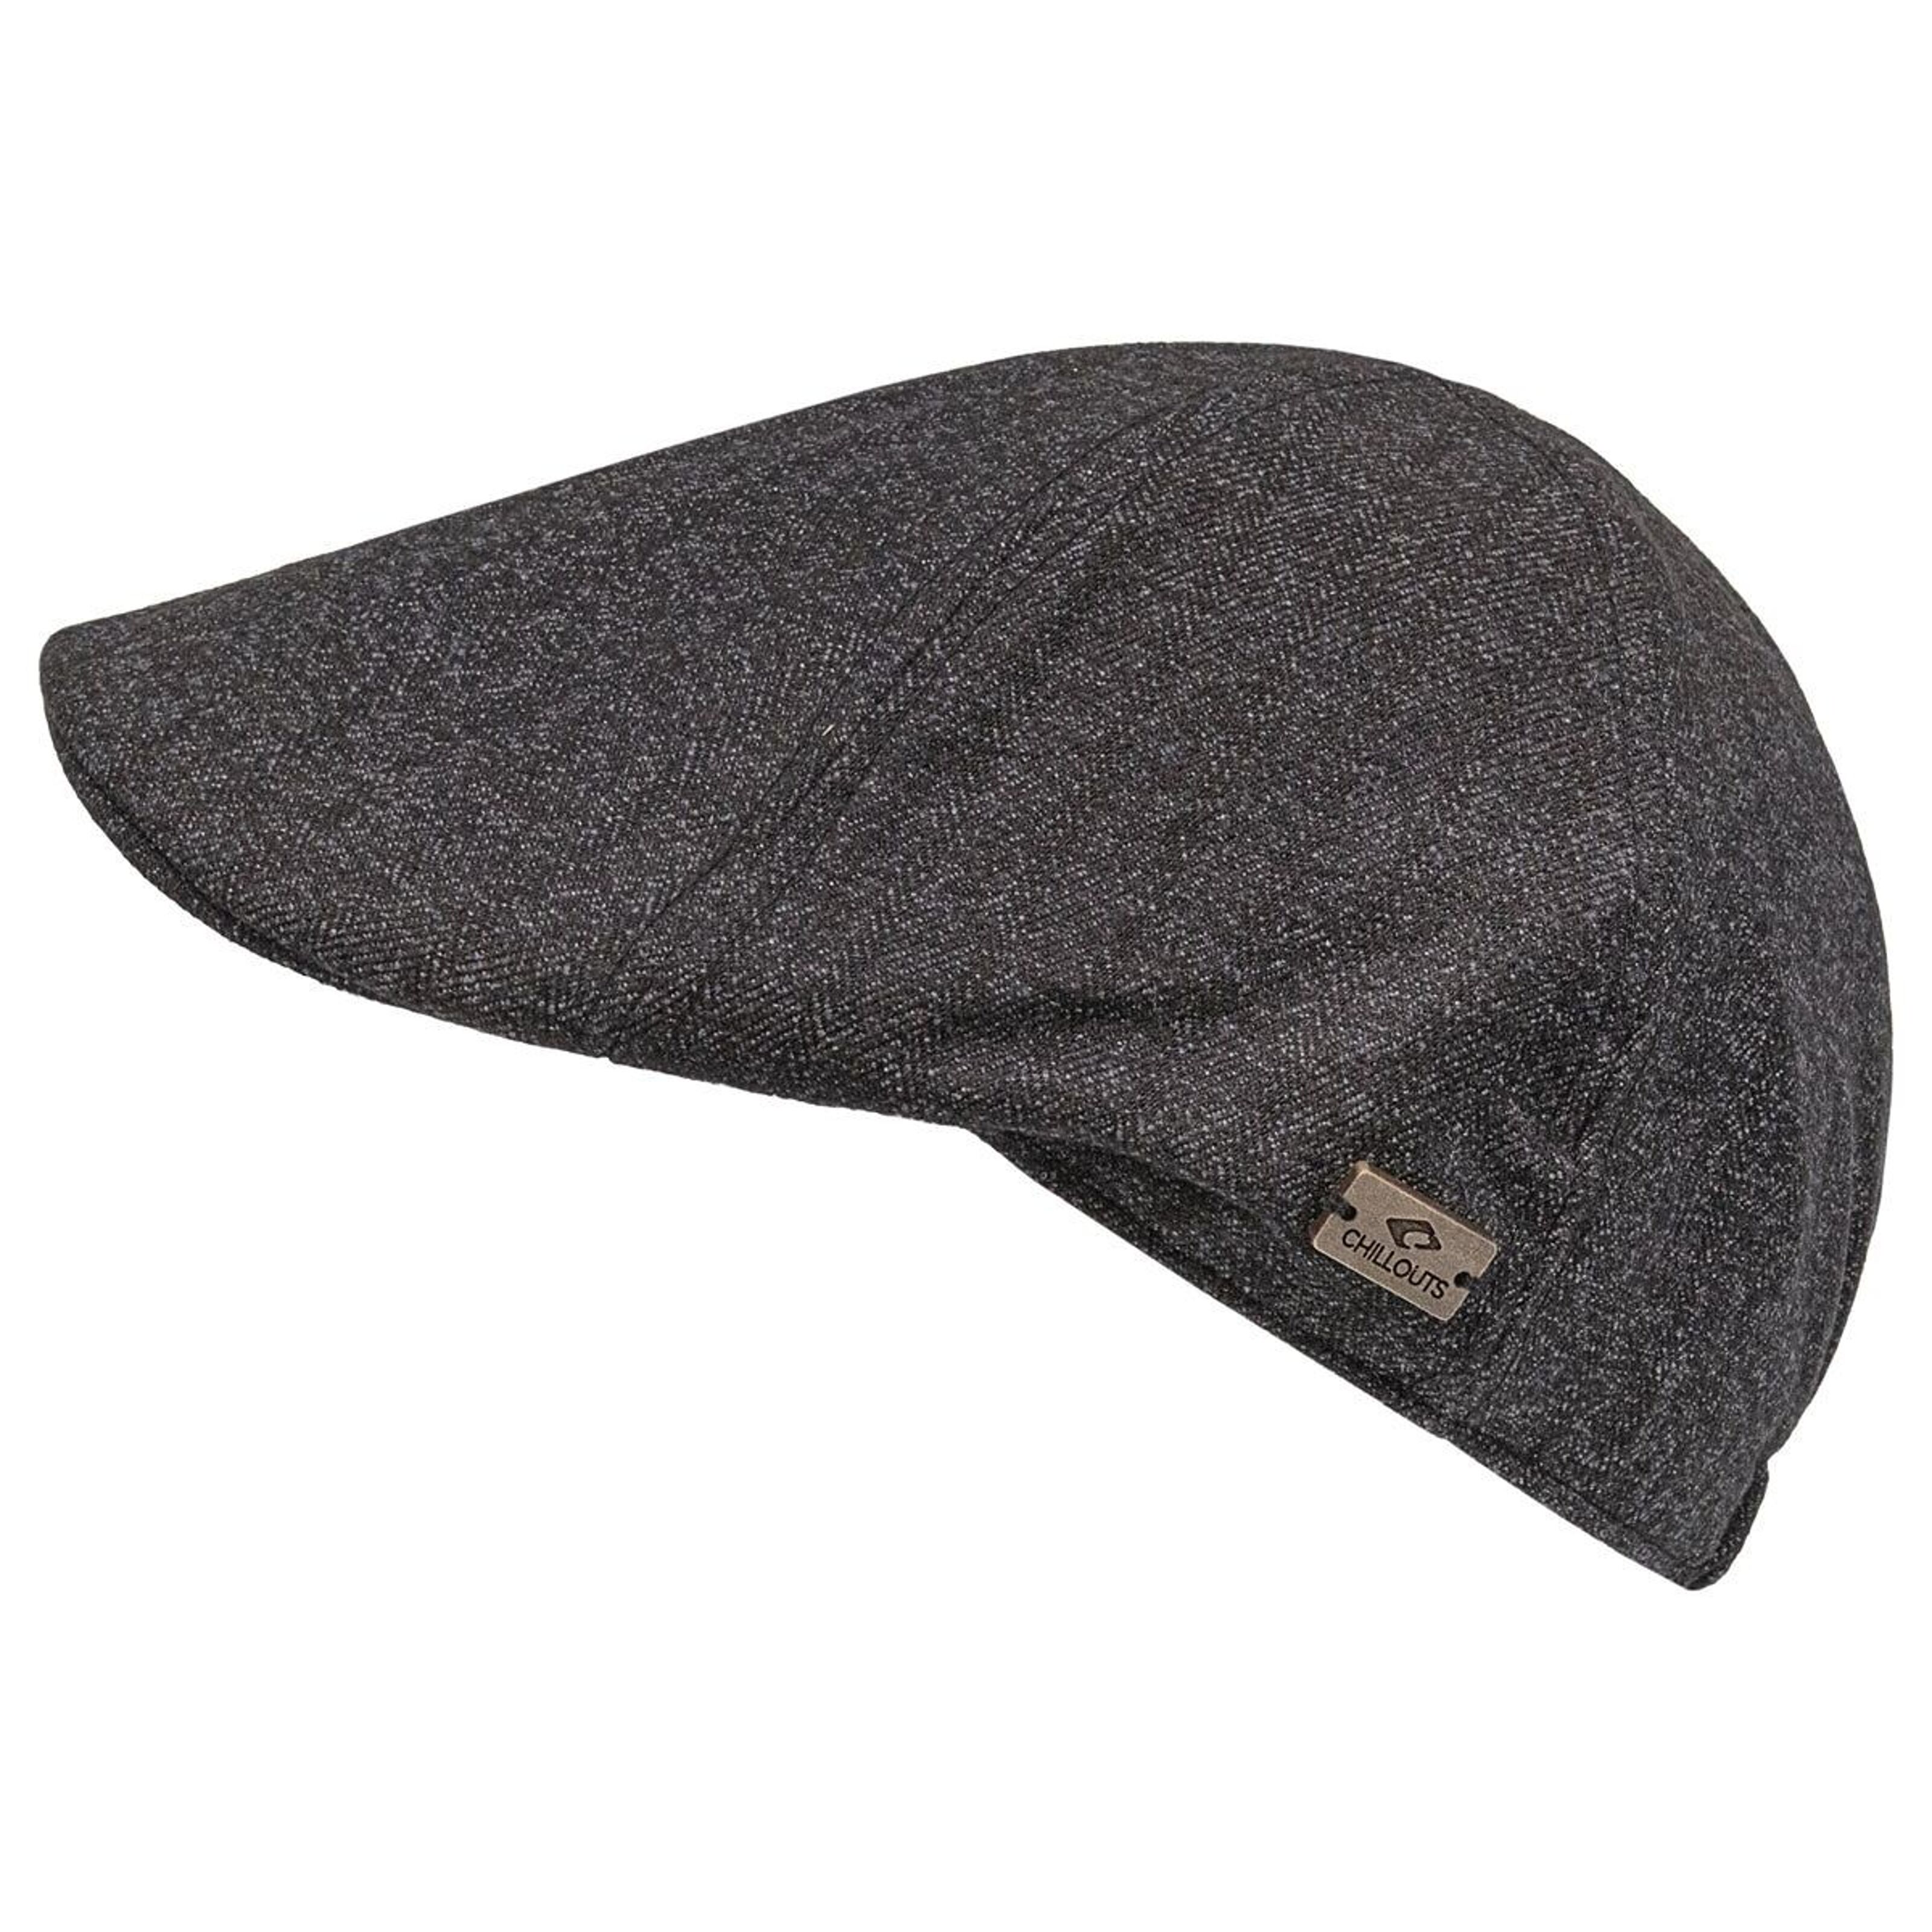 Elliot Flat Hat Buy wholesale Cap